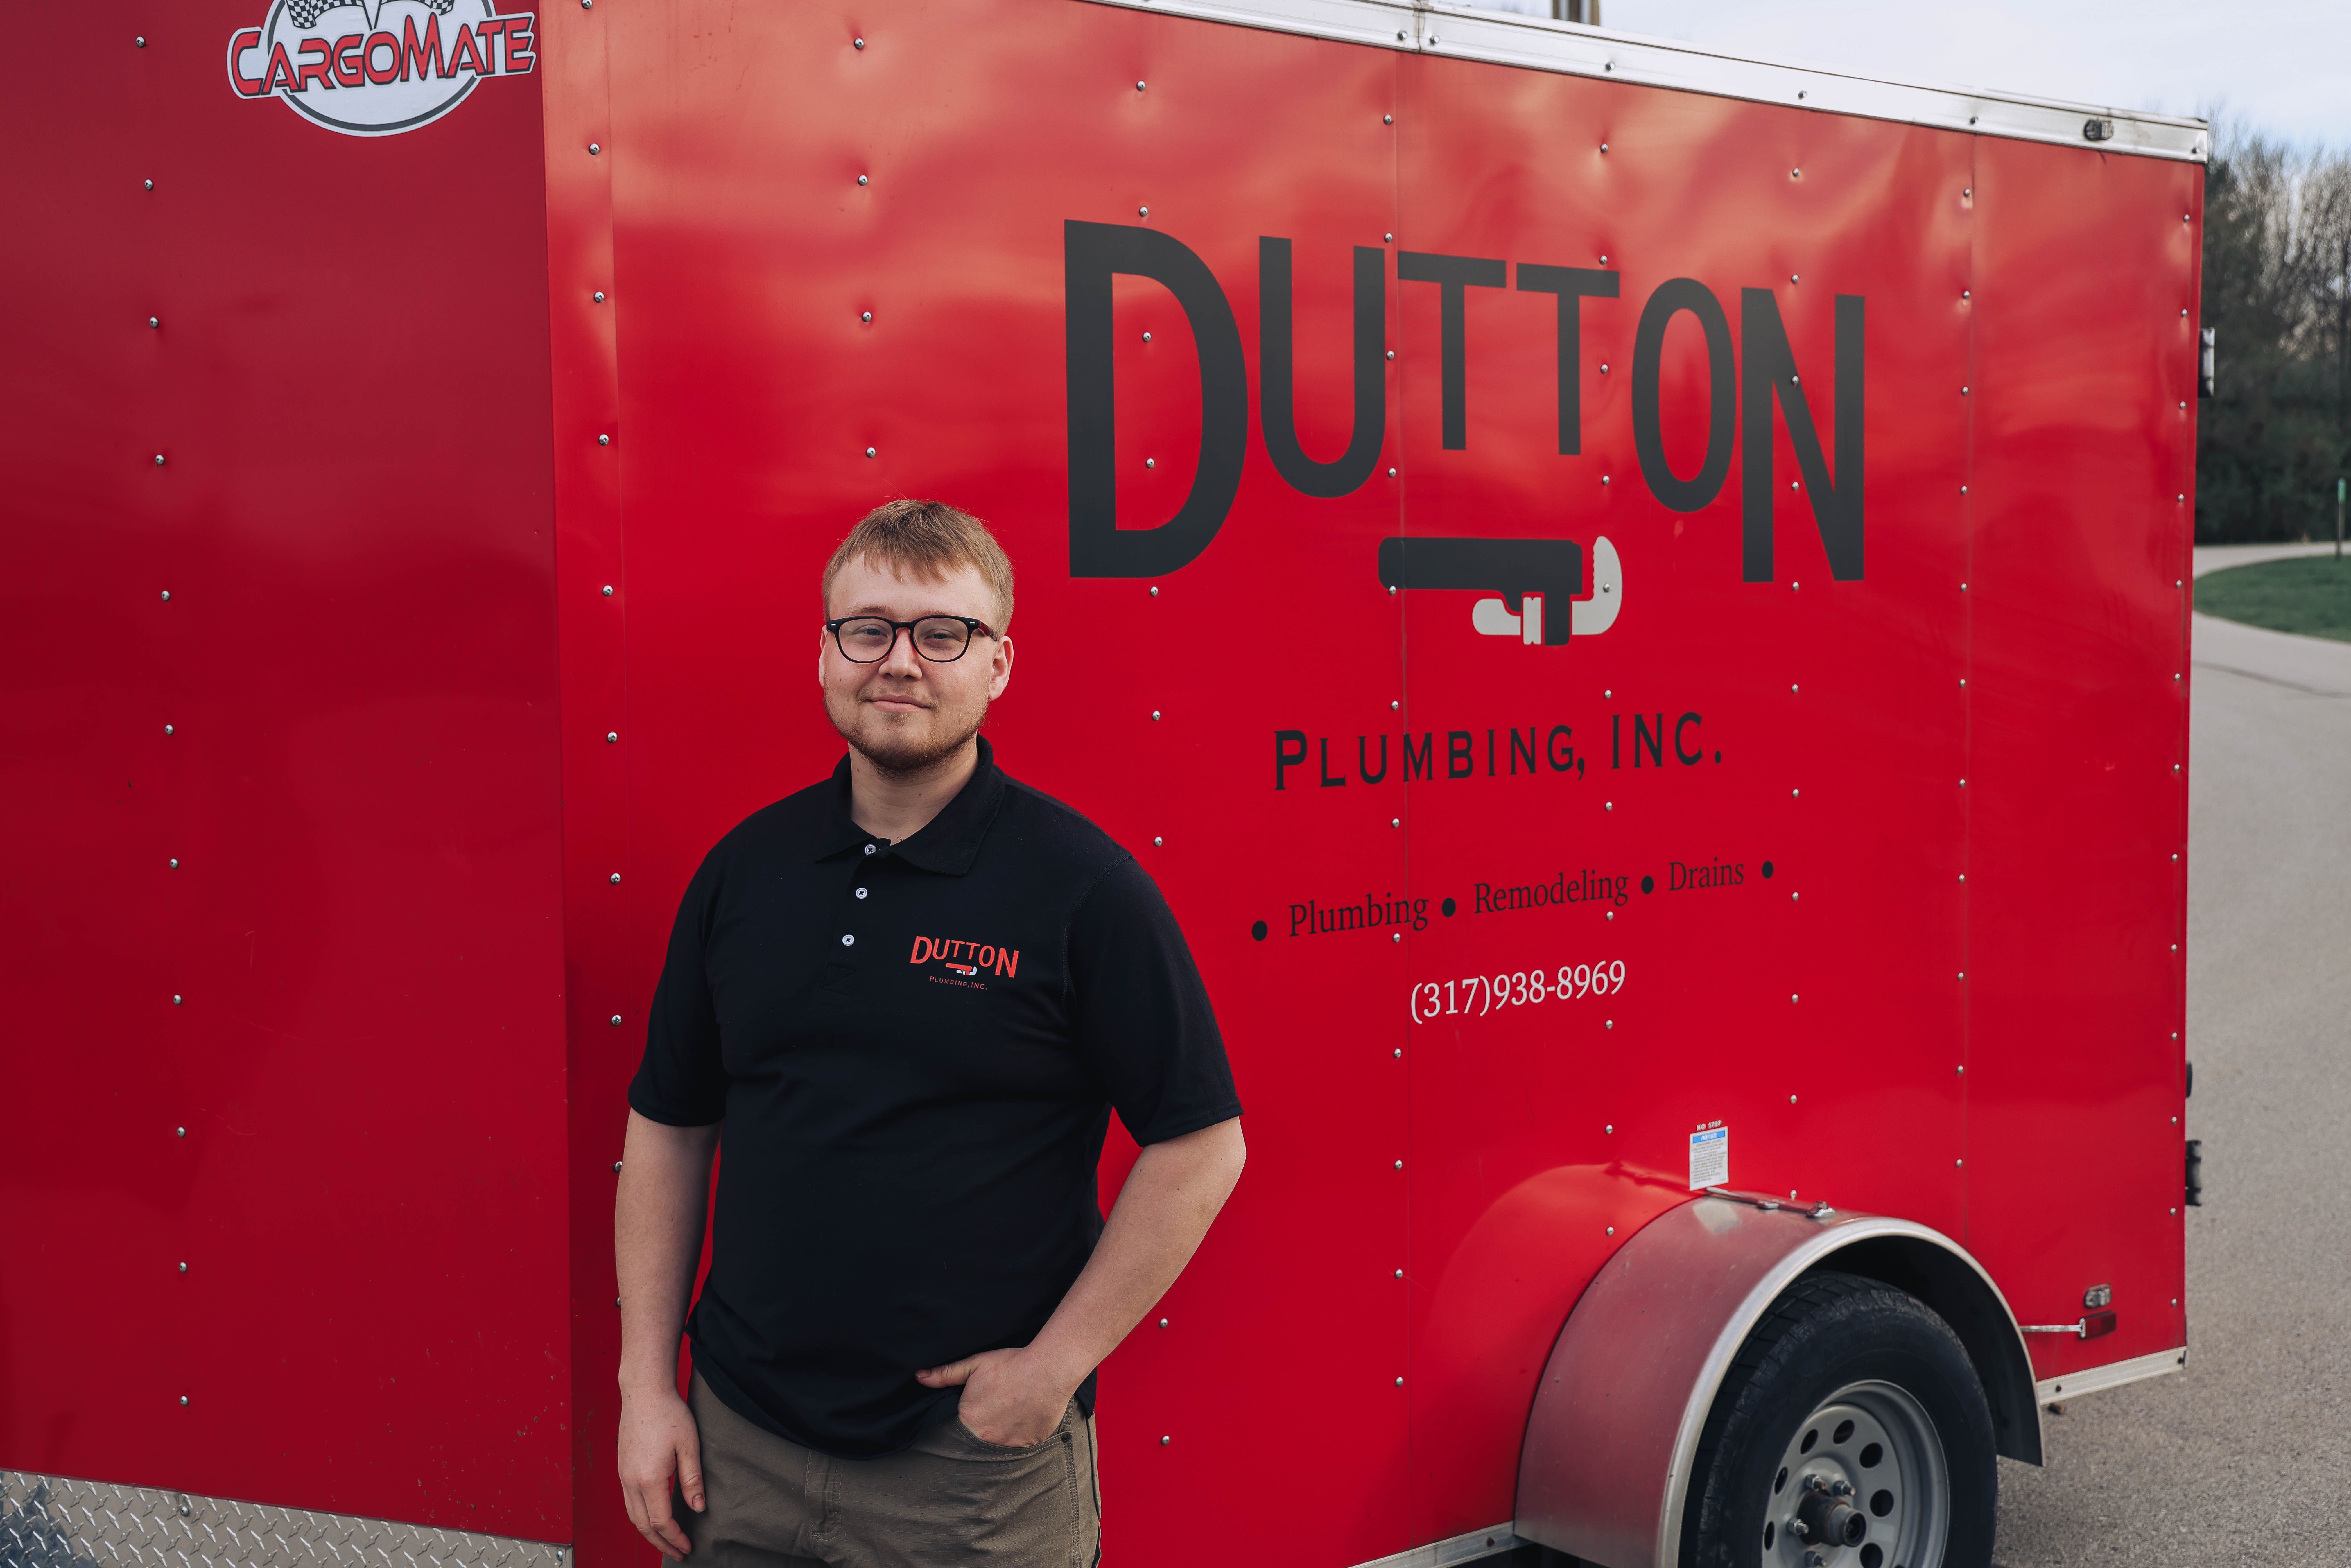 Noah Dutton at Dutton Plumbing, Inc. in Whiteland, IN